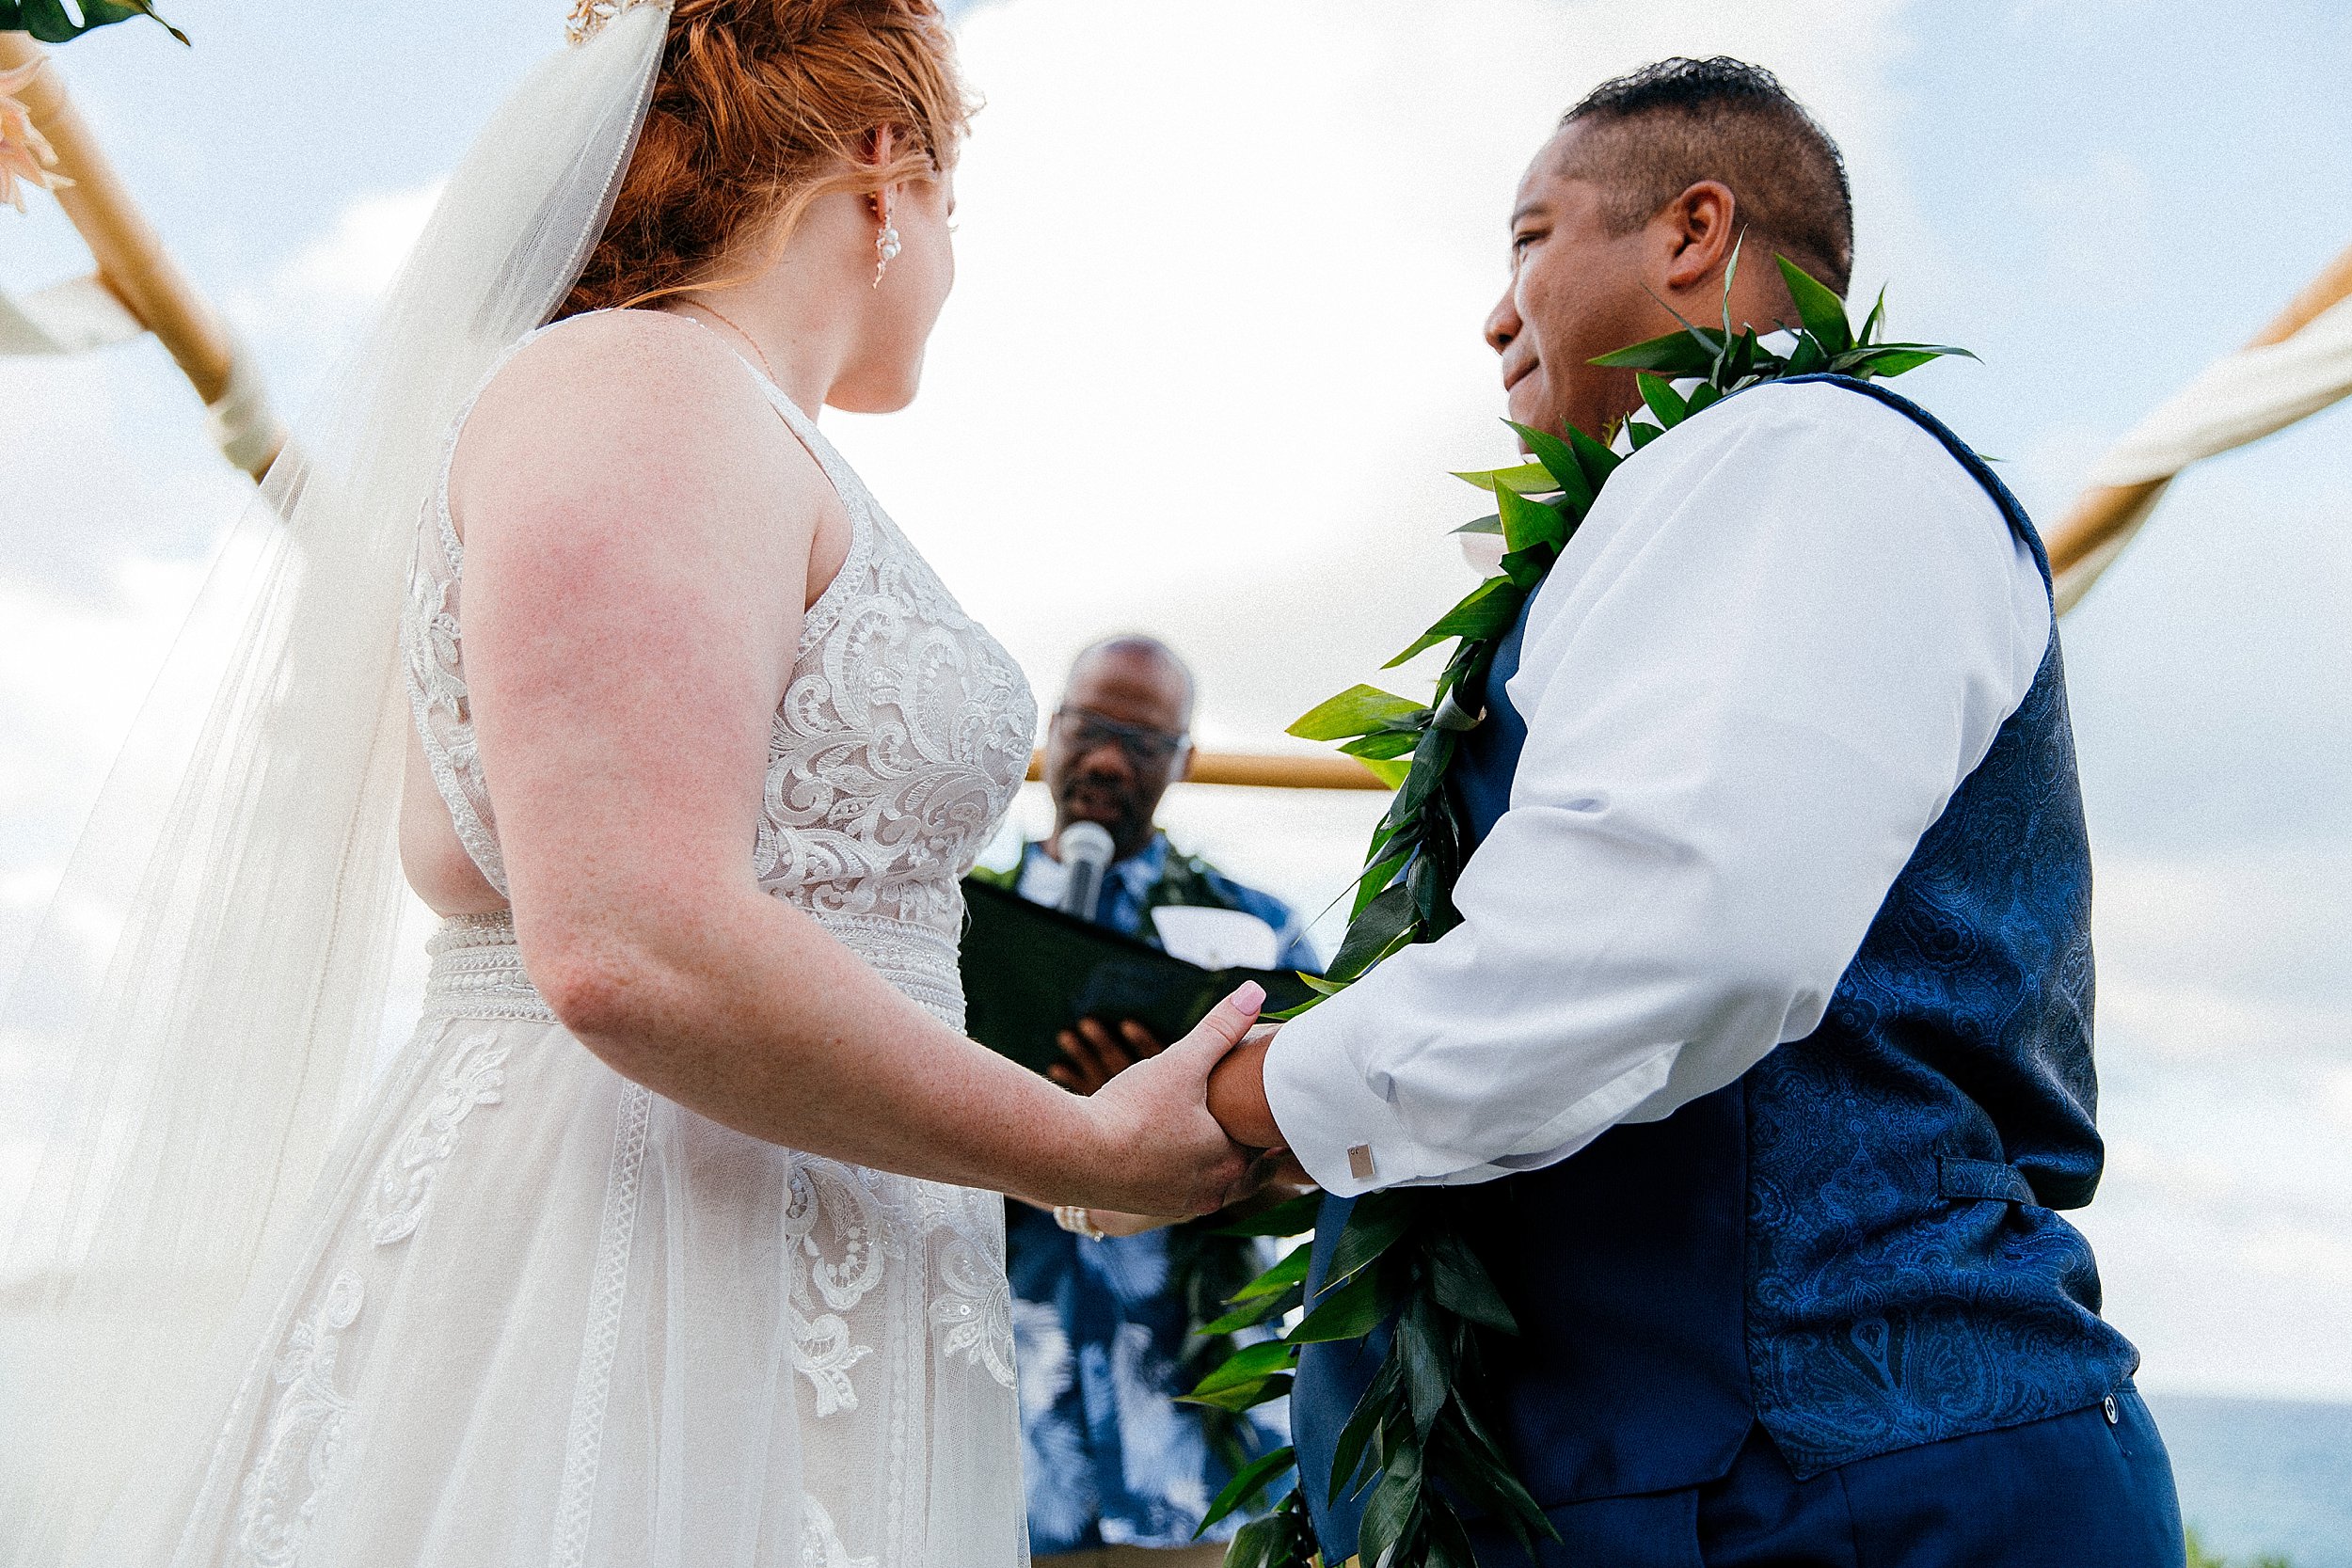  Hawaii Wedding at Sea Life Park and Makapuu Lookout 